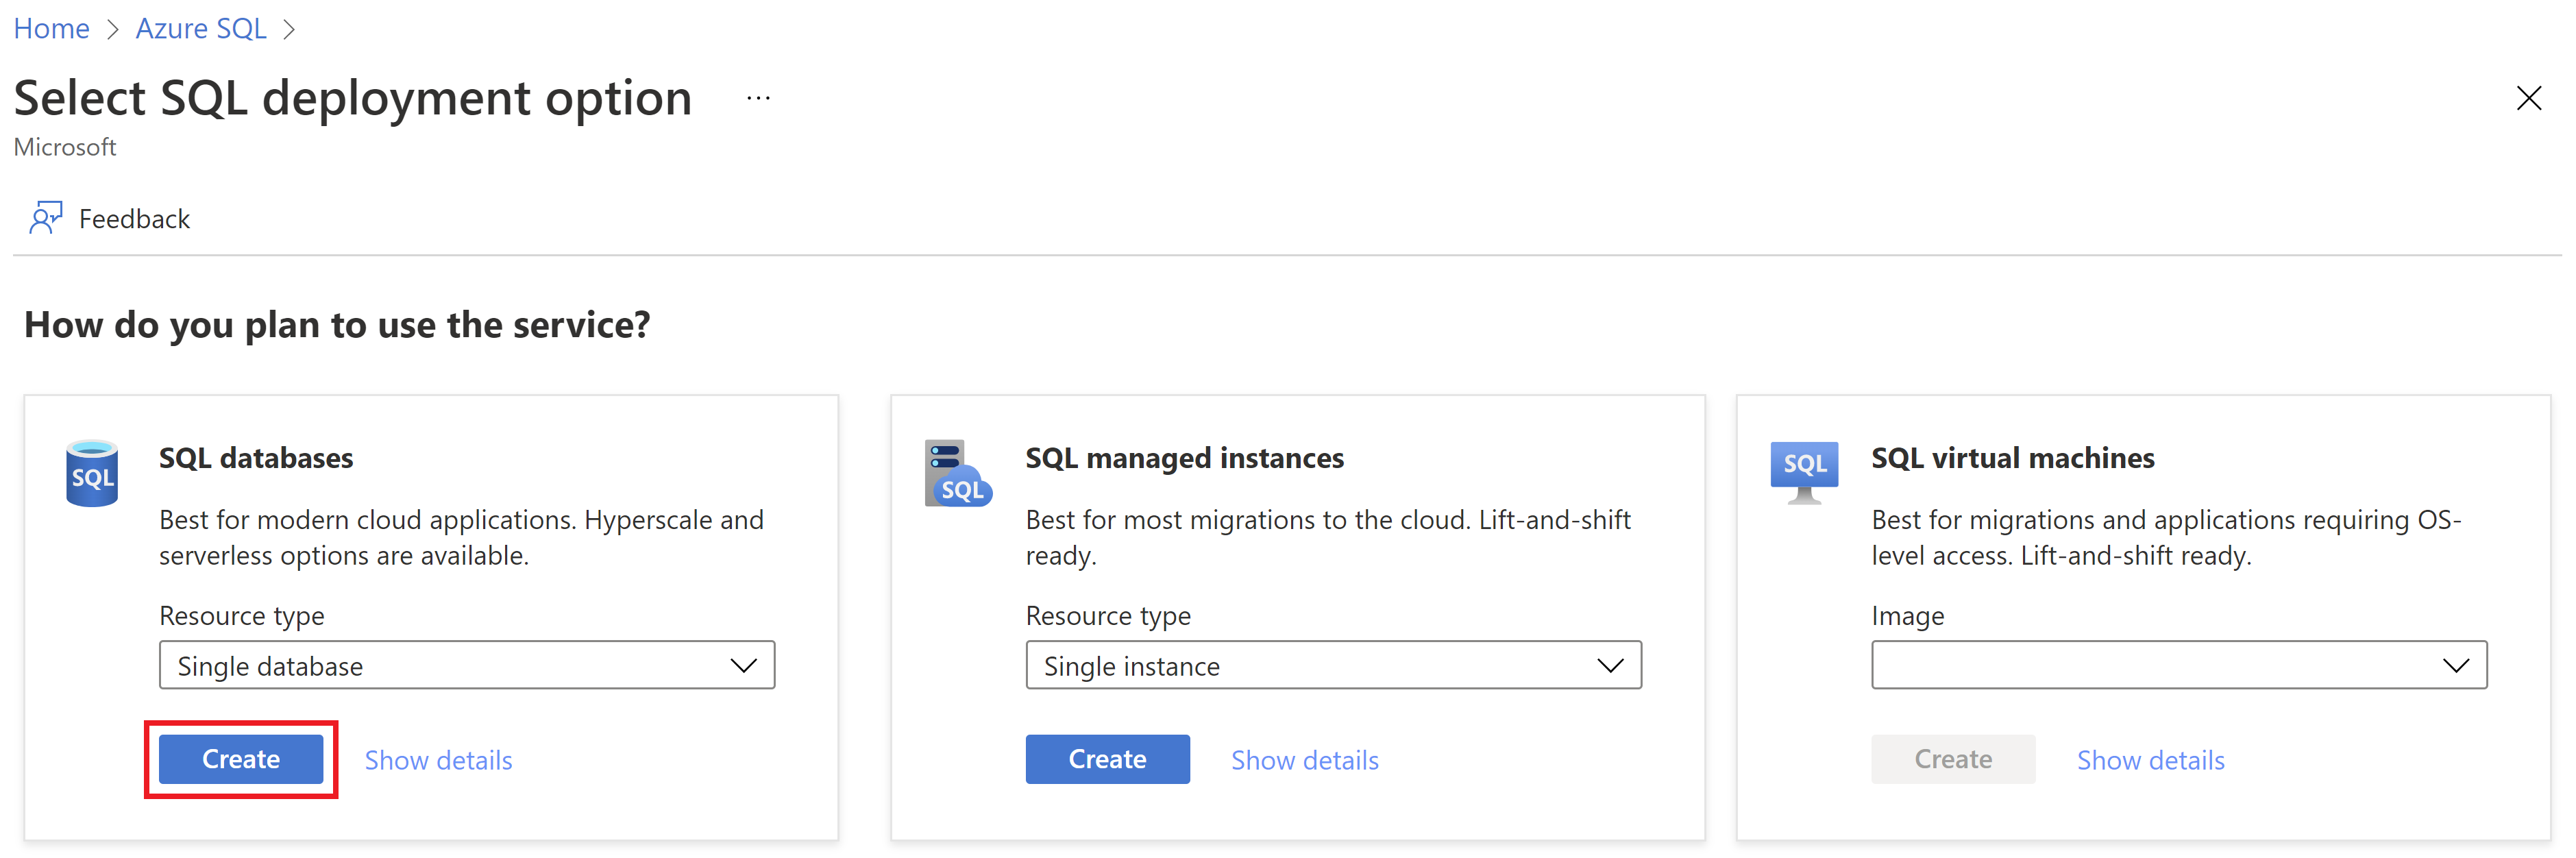 Screenshot of Azure portal, showing the Add to Azure SQL deployment option.